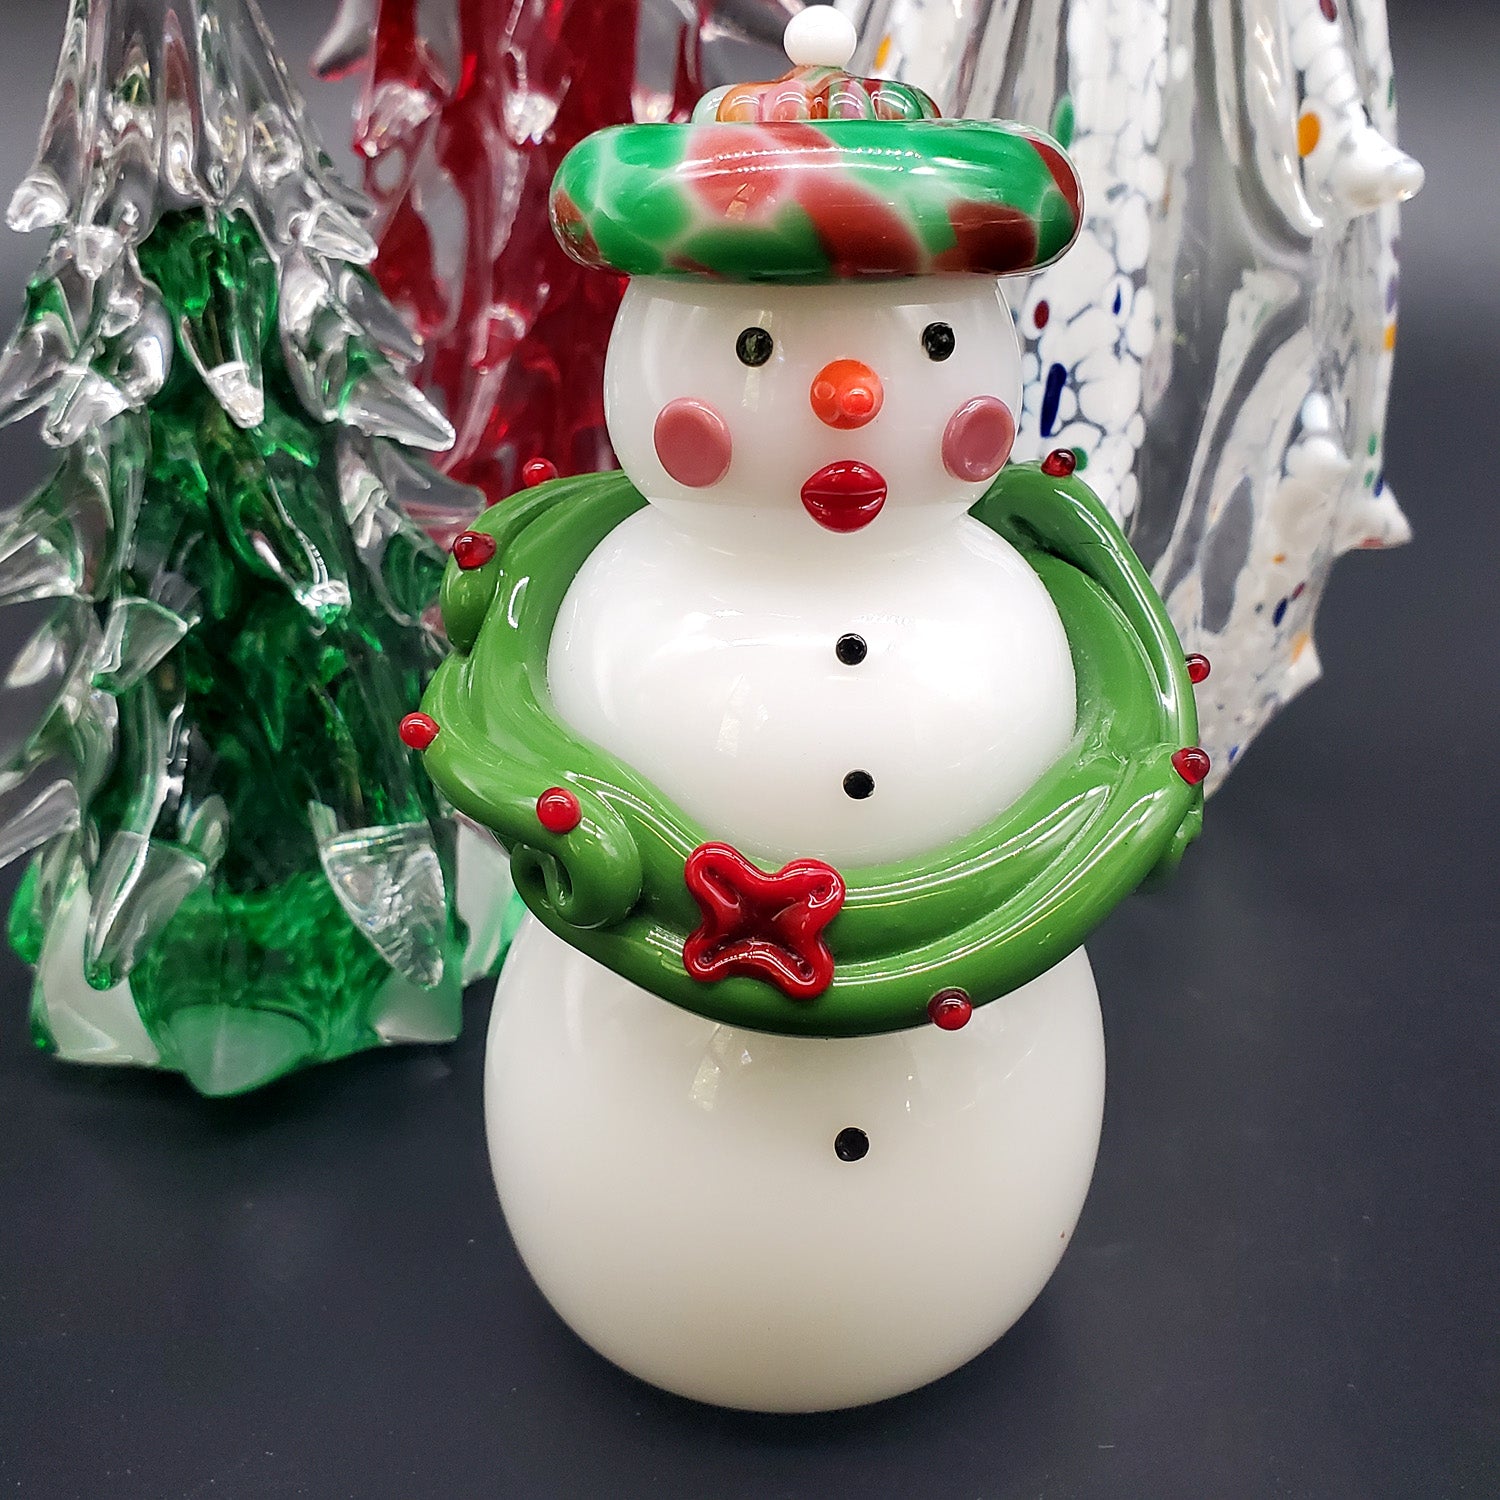 Snowman - Wreath or Mrs. Wreath